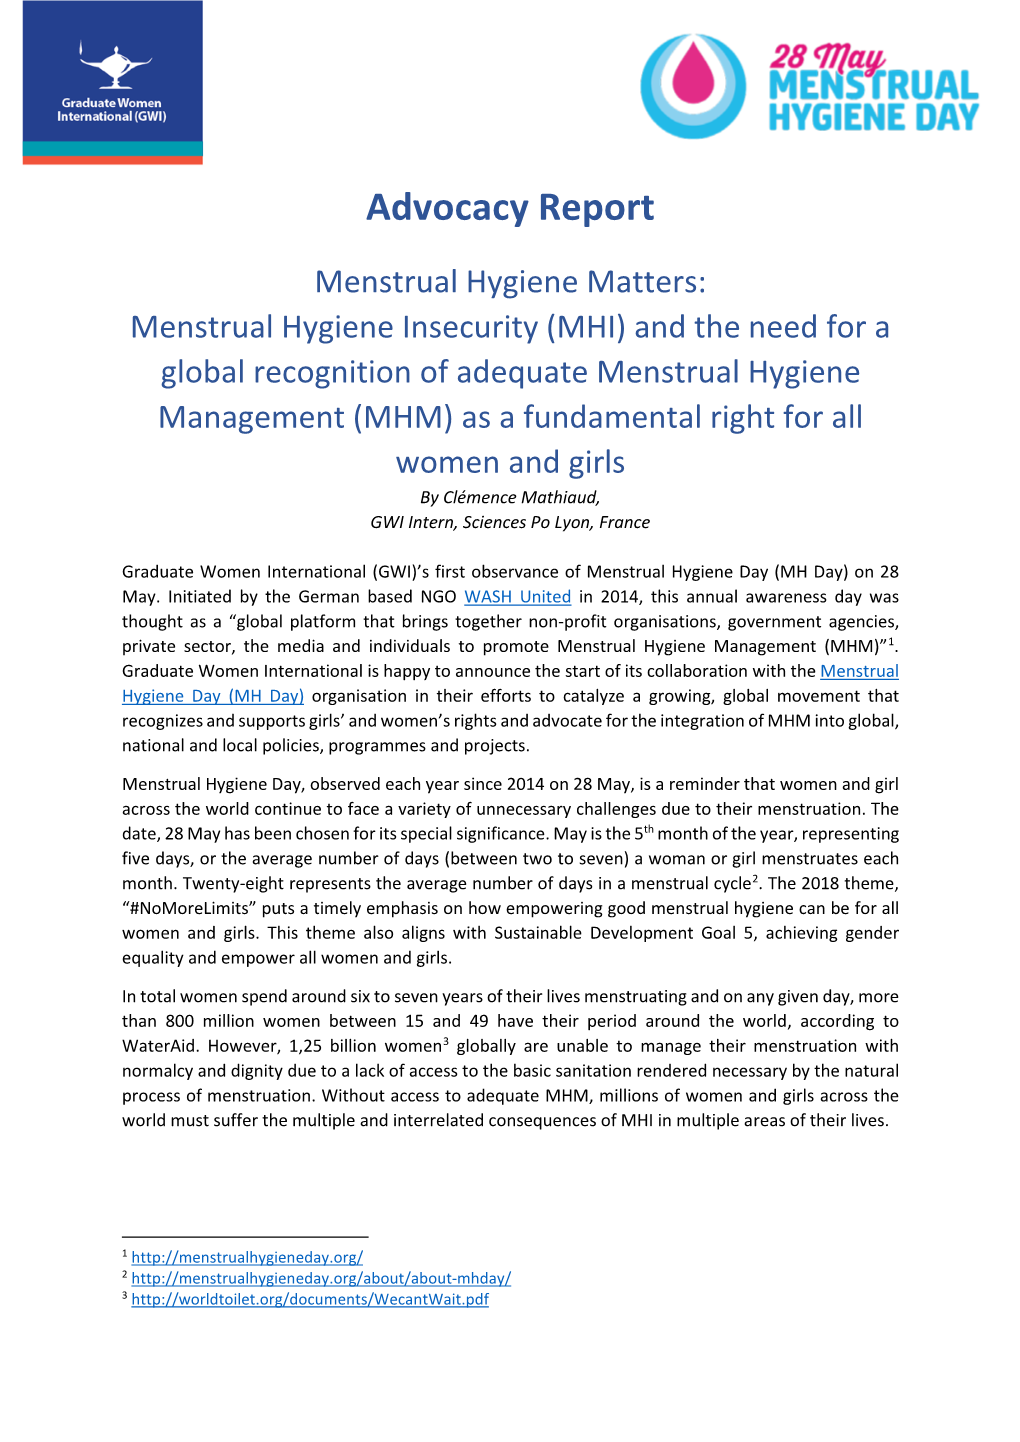 Advocacy Report on Menstrual